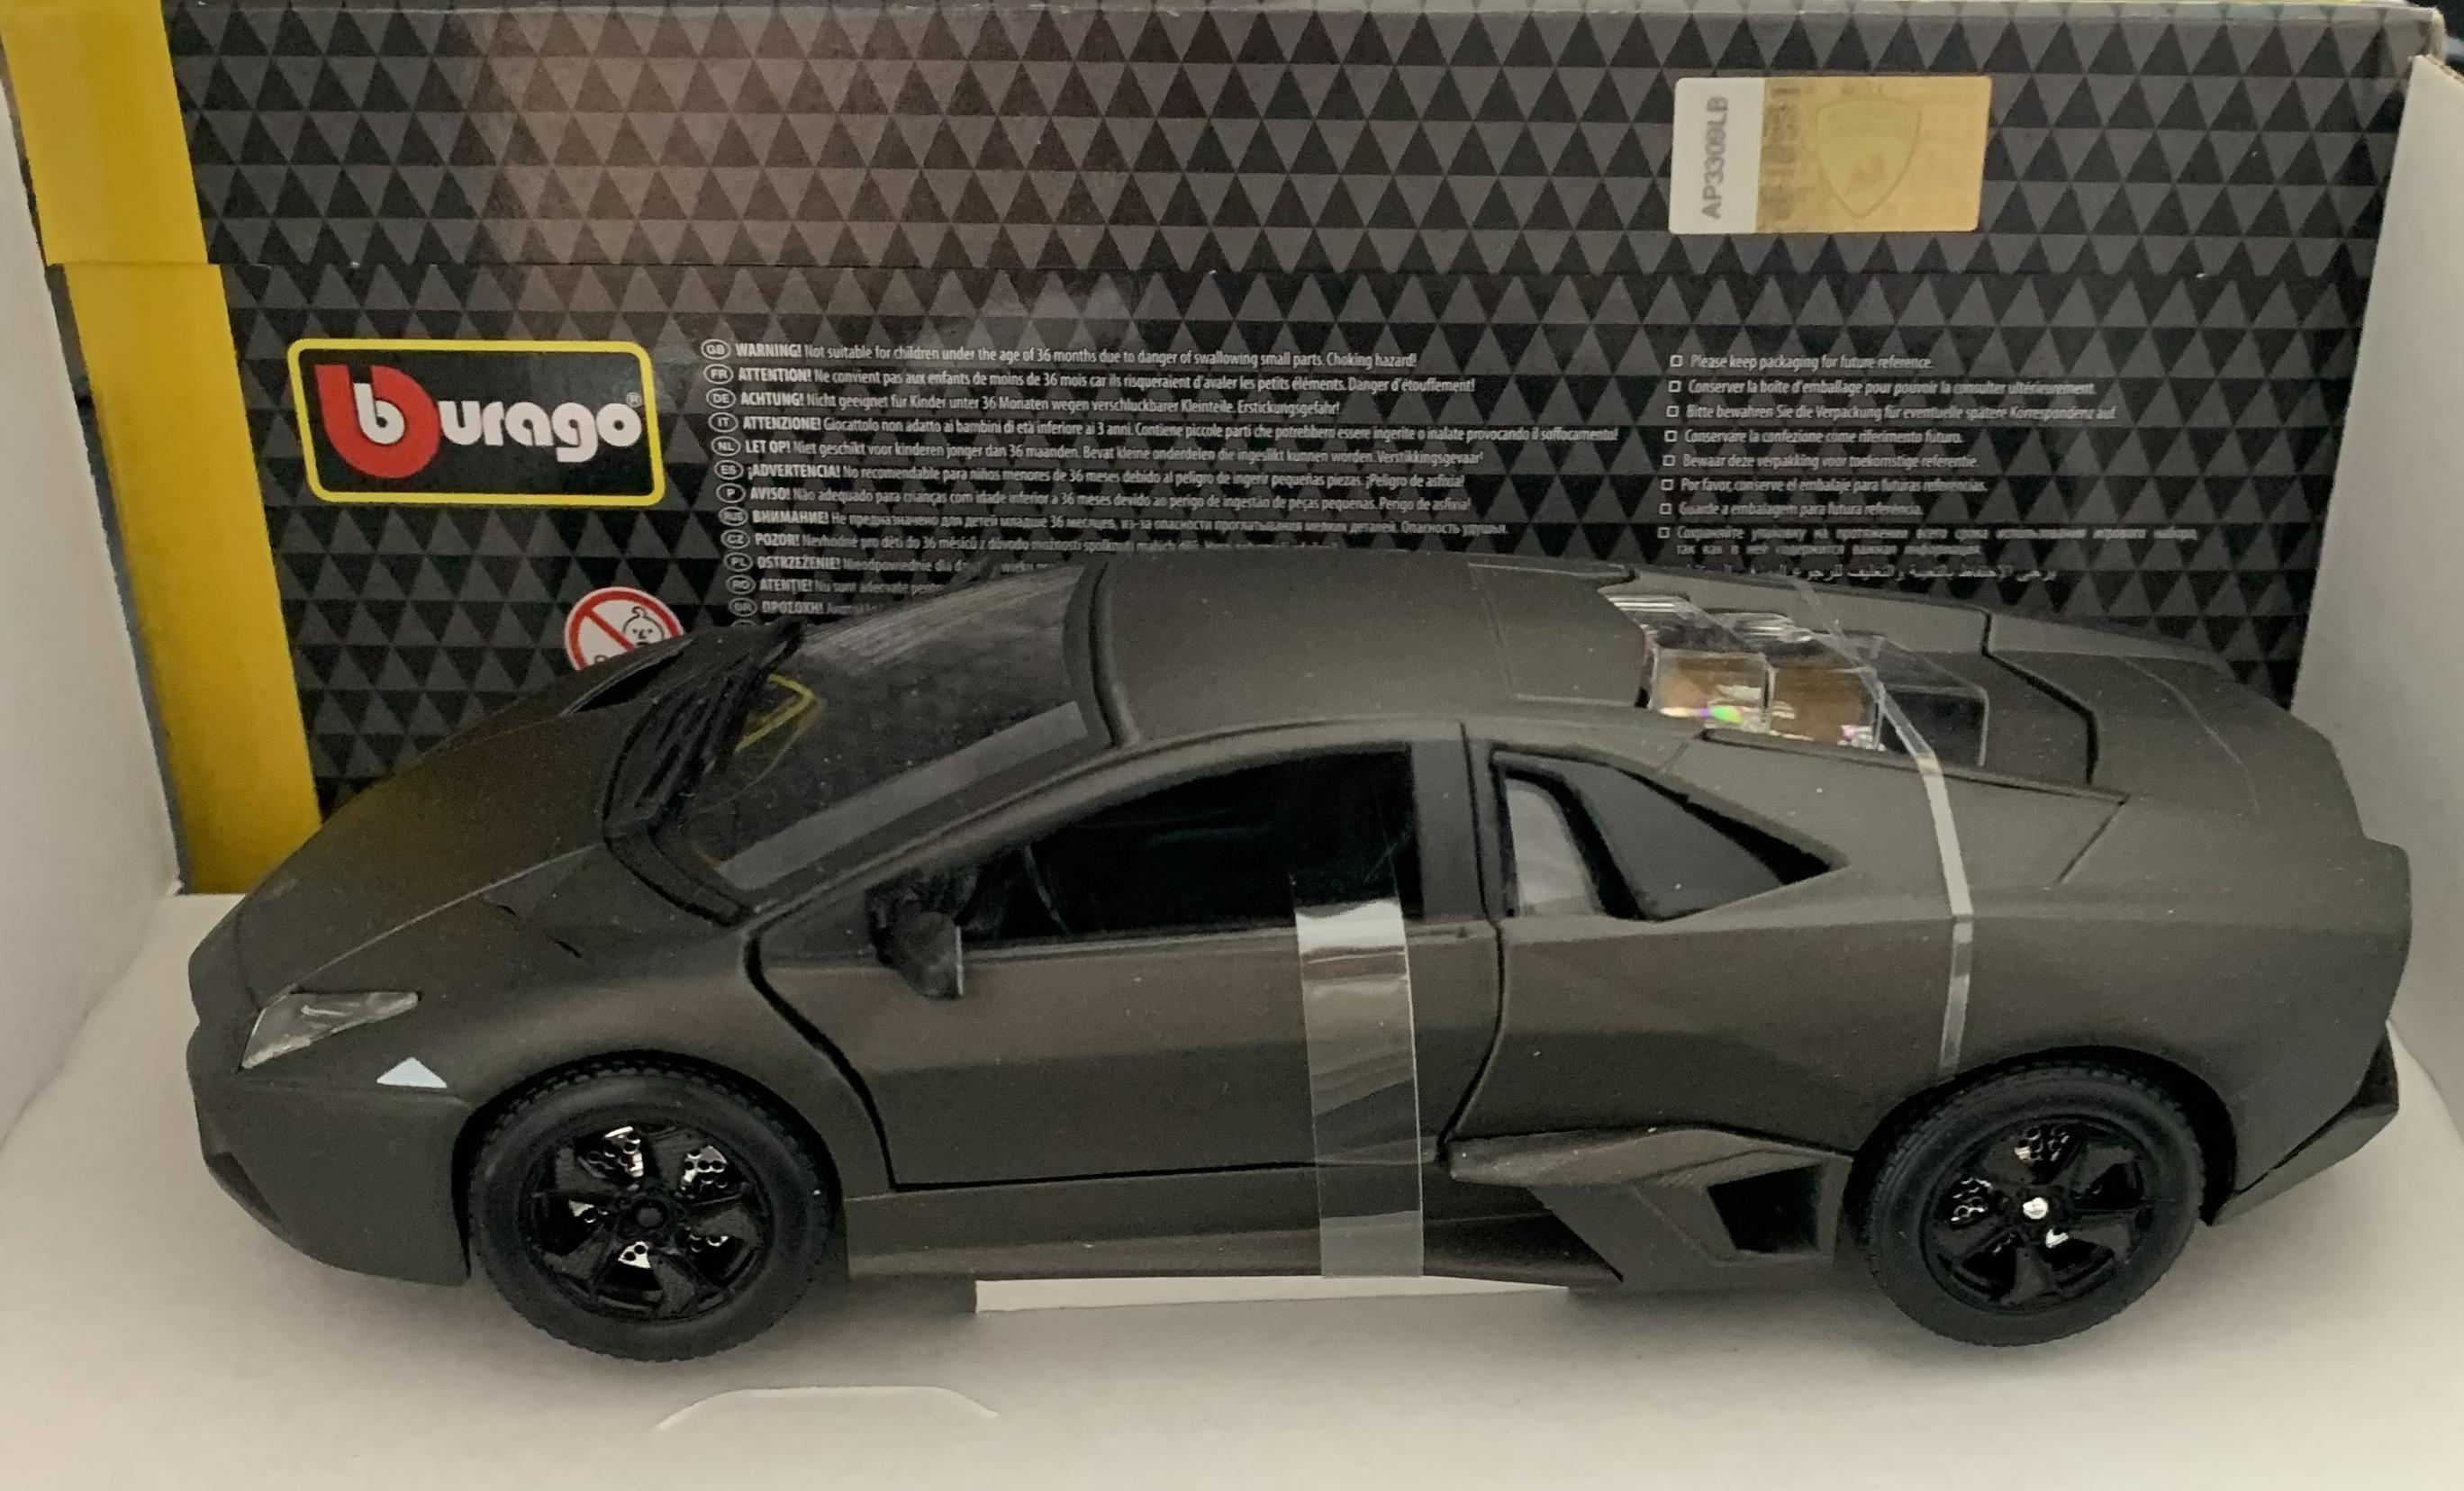 Lamborghini Reventon 2007 in matt dark grey 1:24 scale model from Bburago